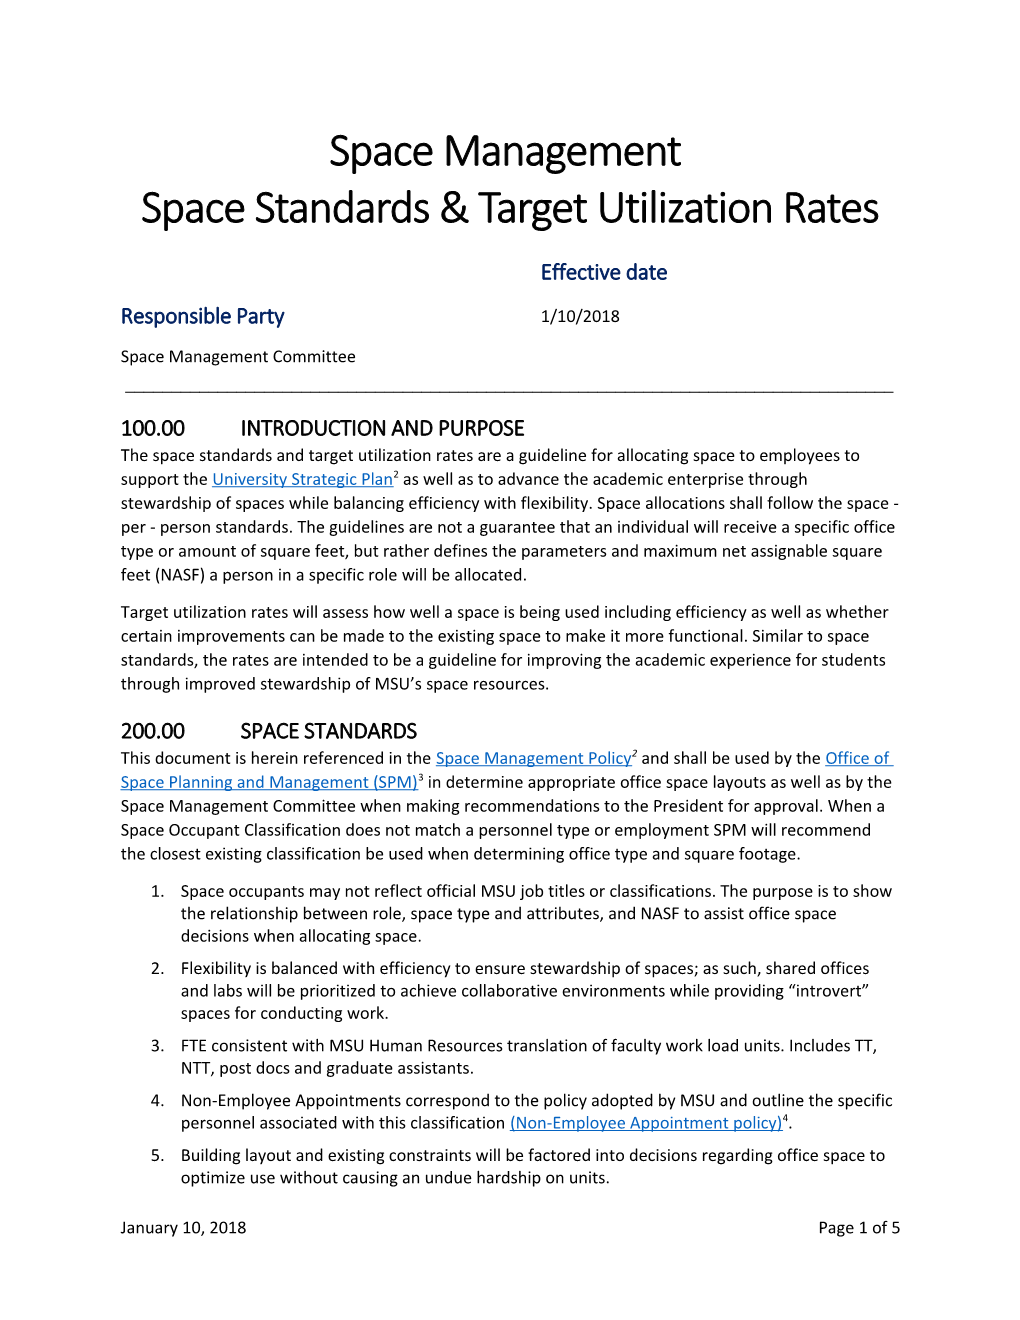 Space Standards & Target Utilization Rates